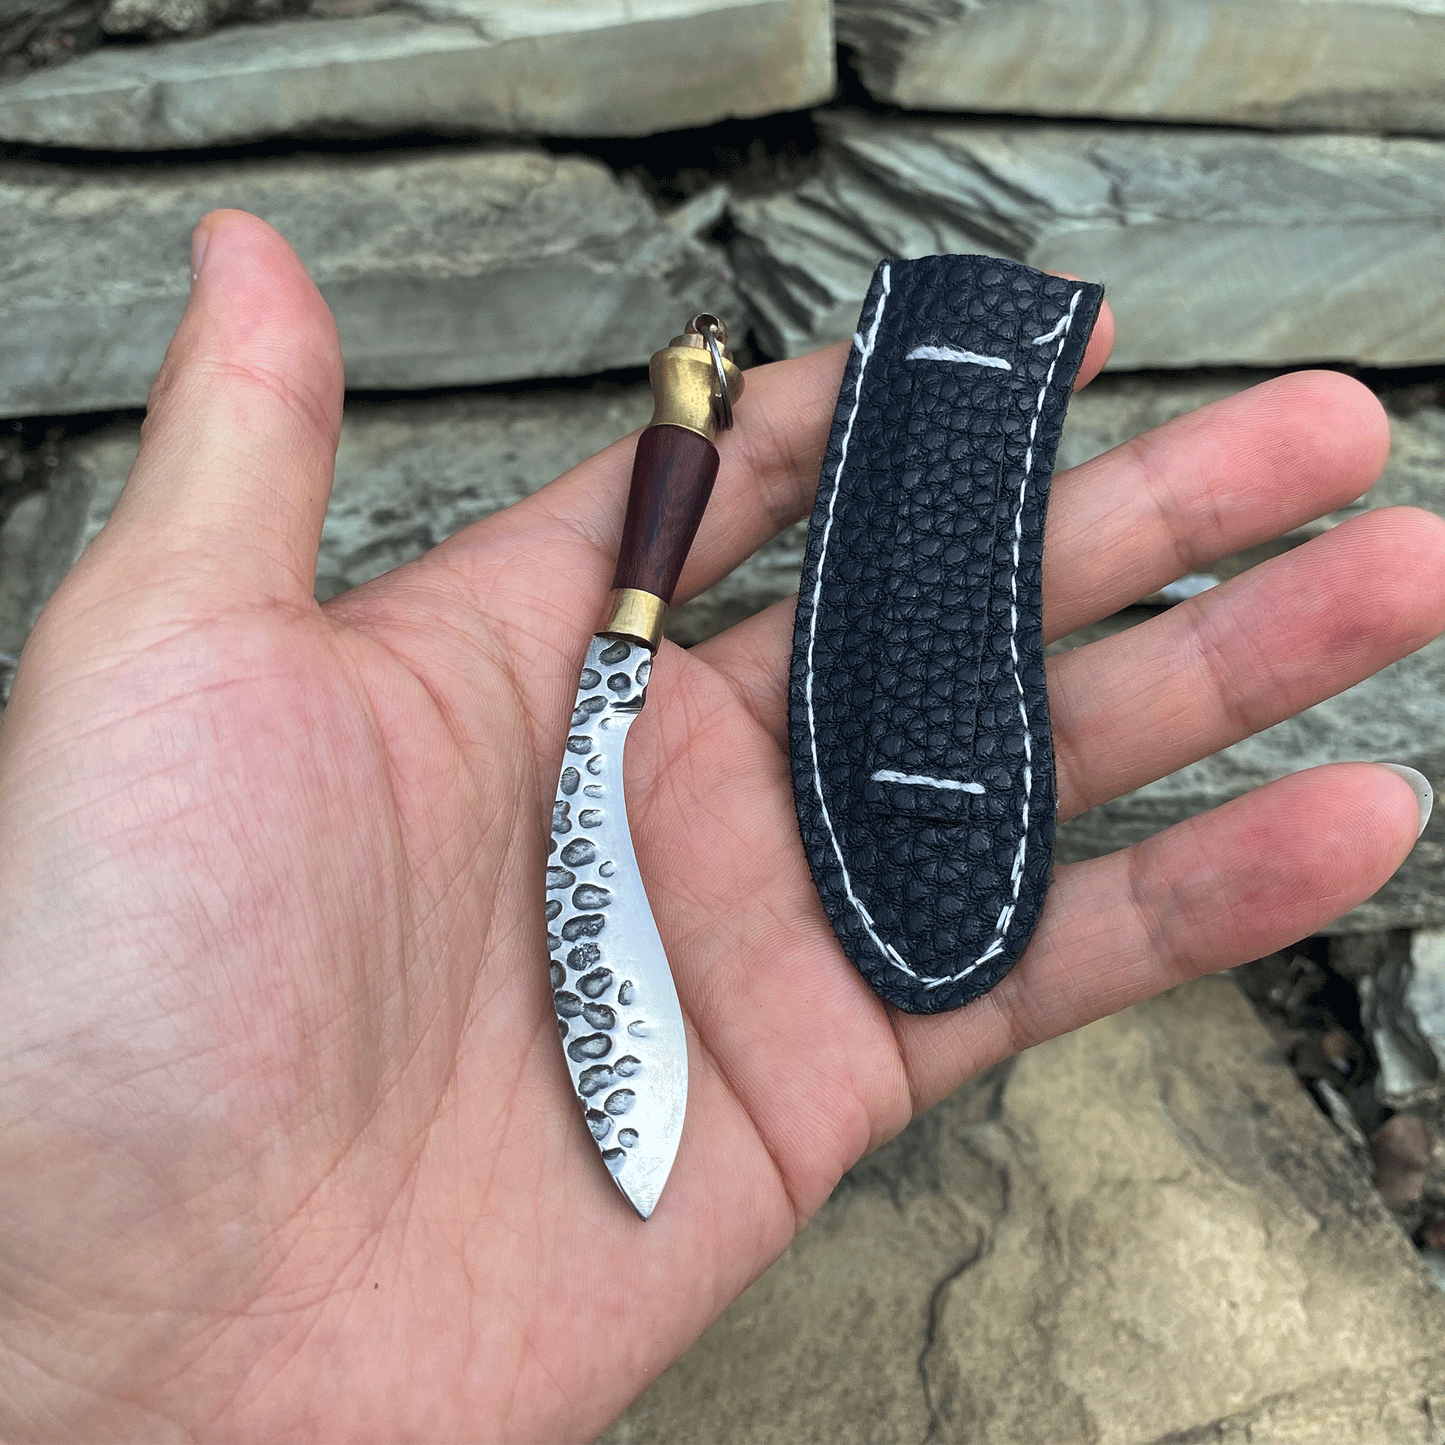 Mini Nepal Saber 3.7" Hand-Forged Small Nepal Knife